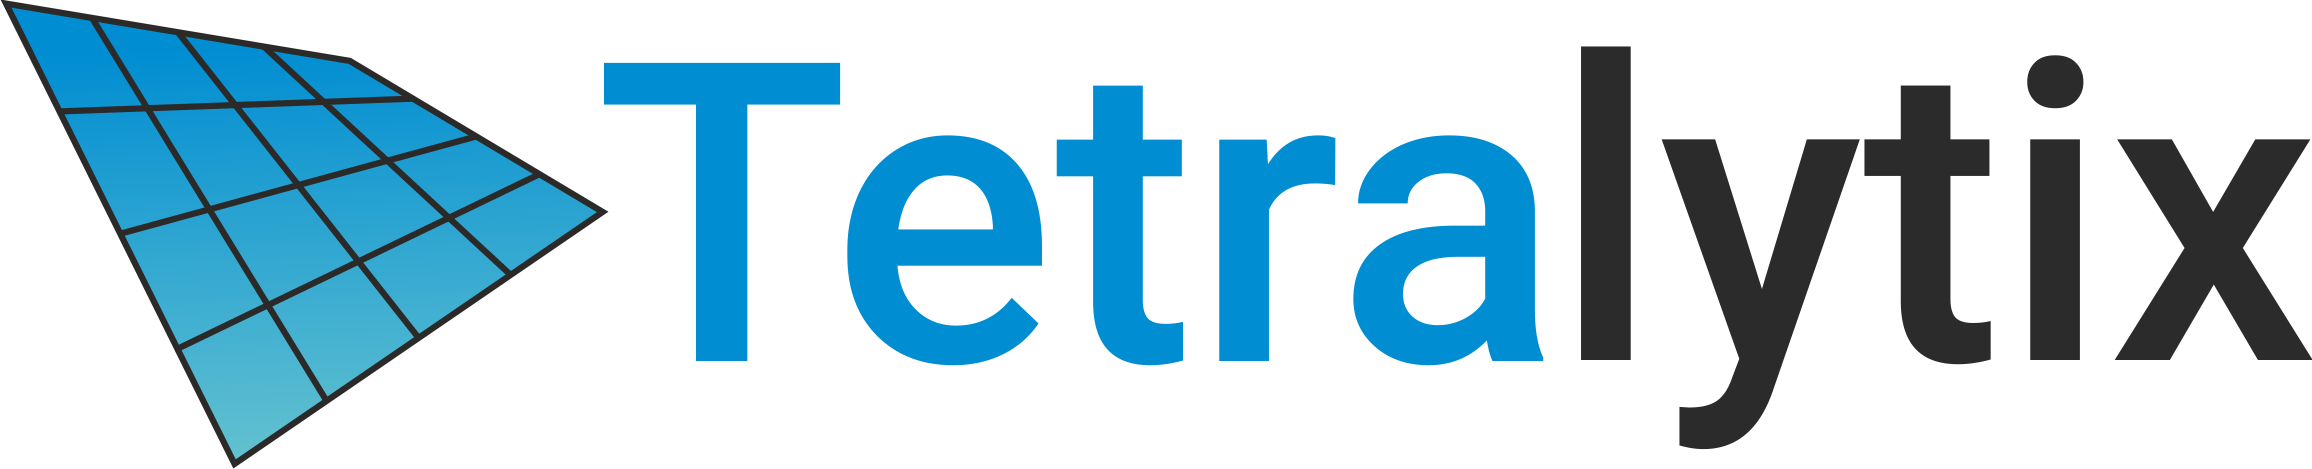 Tetralytix GmbH